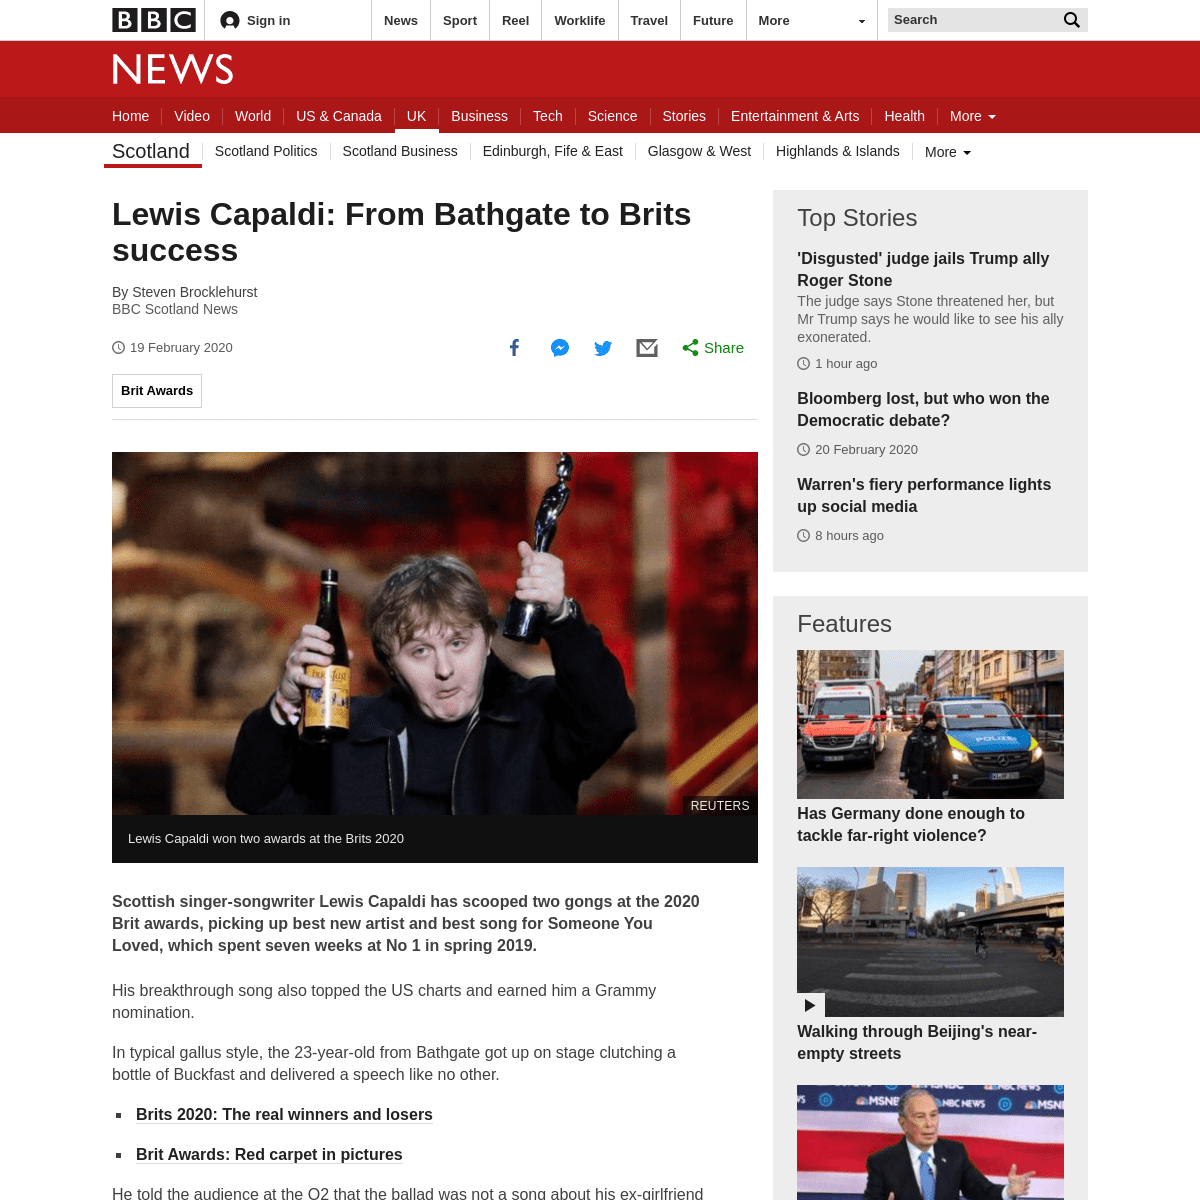 A complete backup of www.bbc.com/news/uk-scotland-51558870